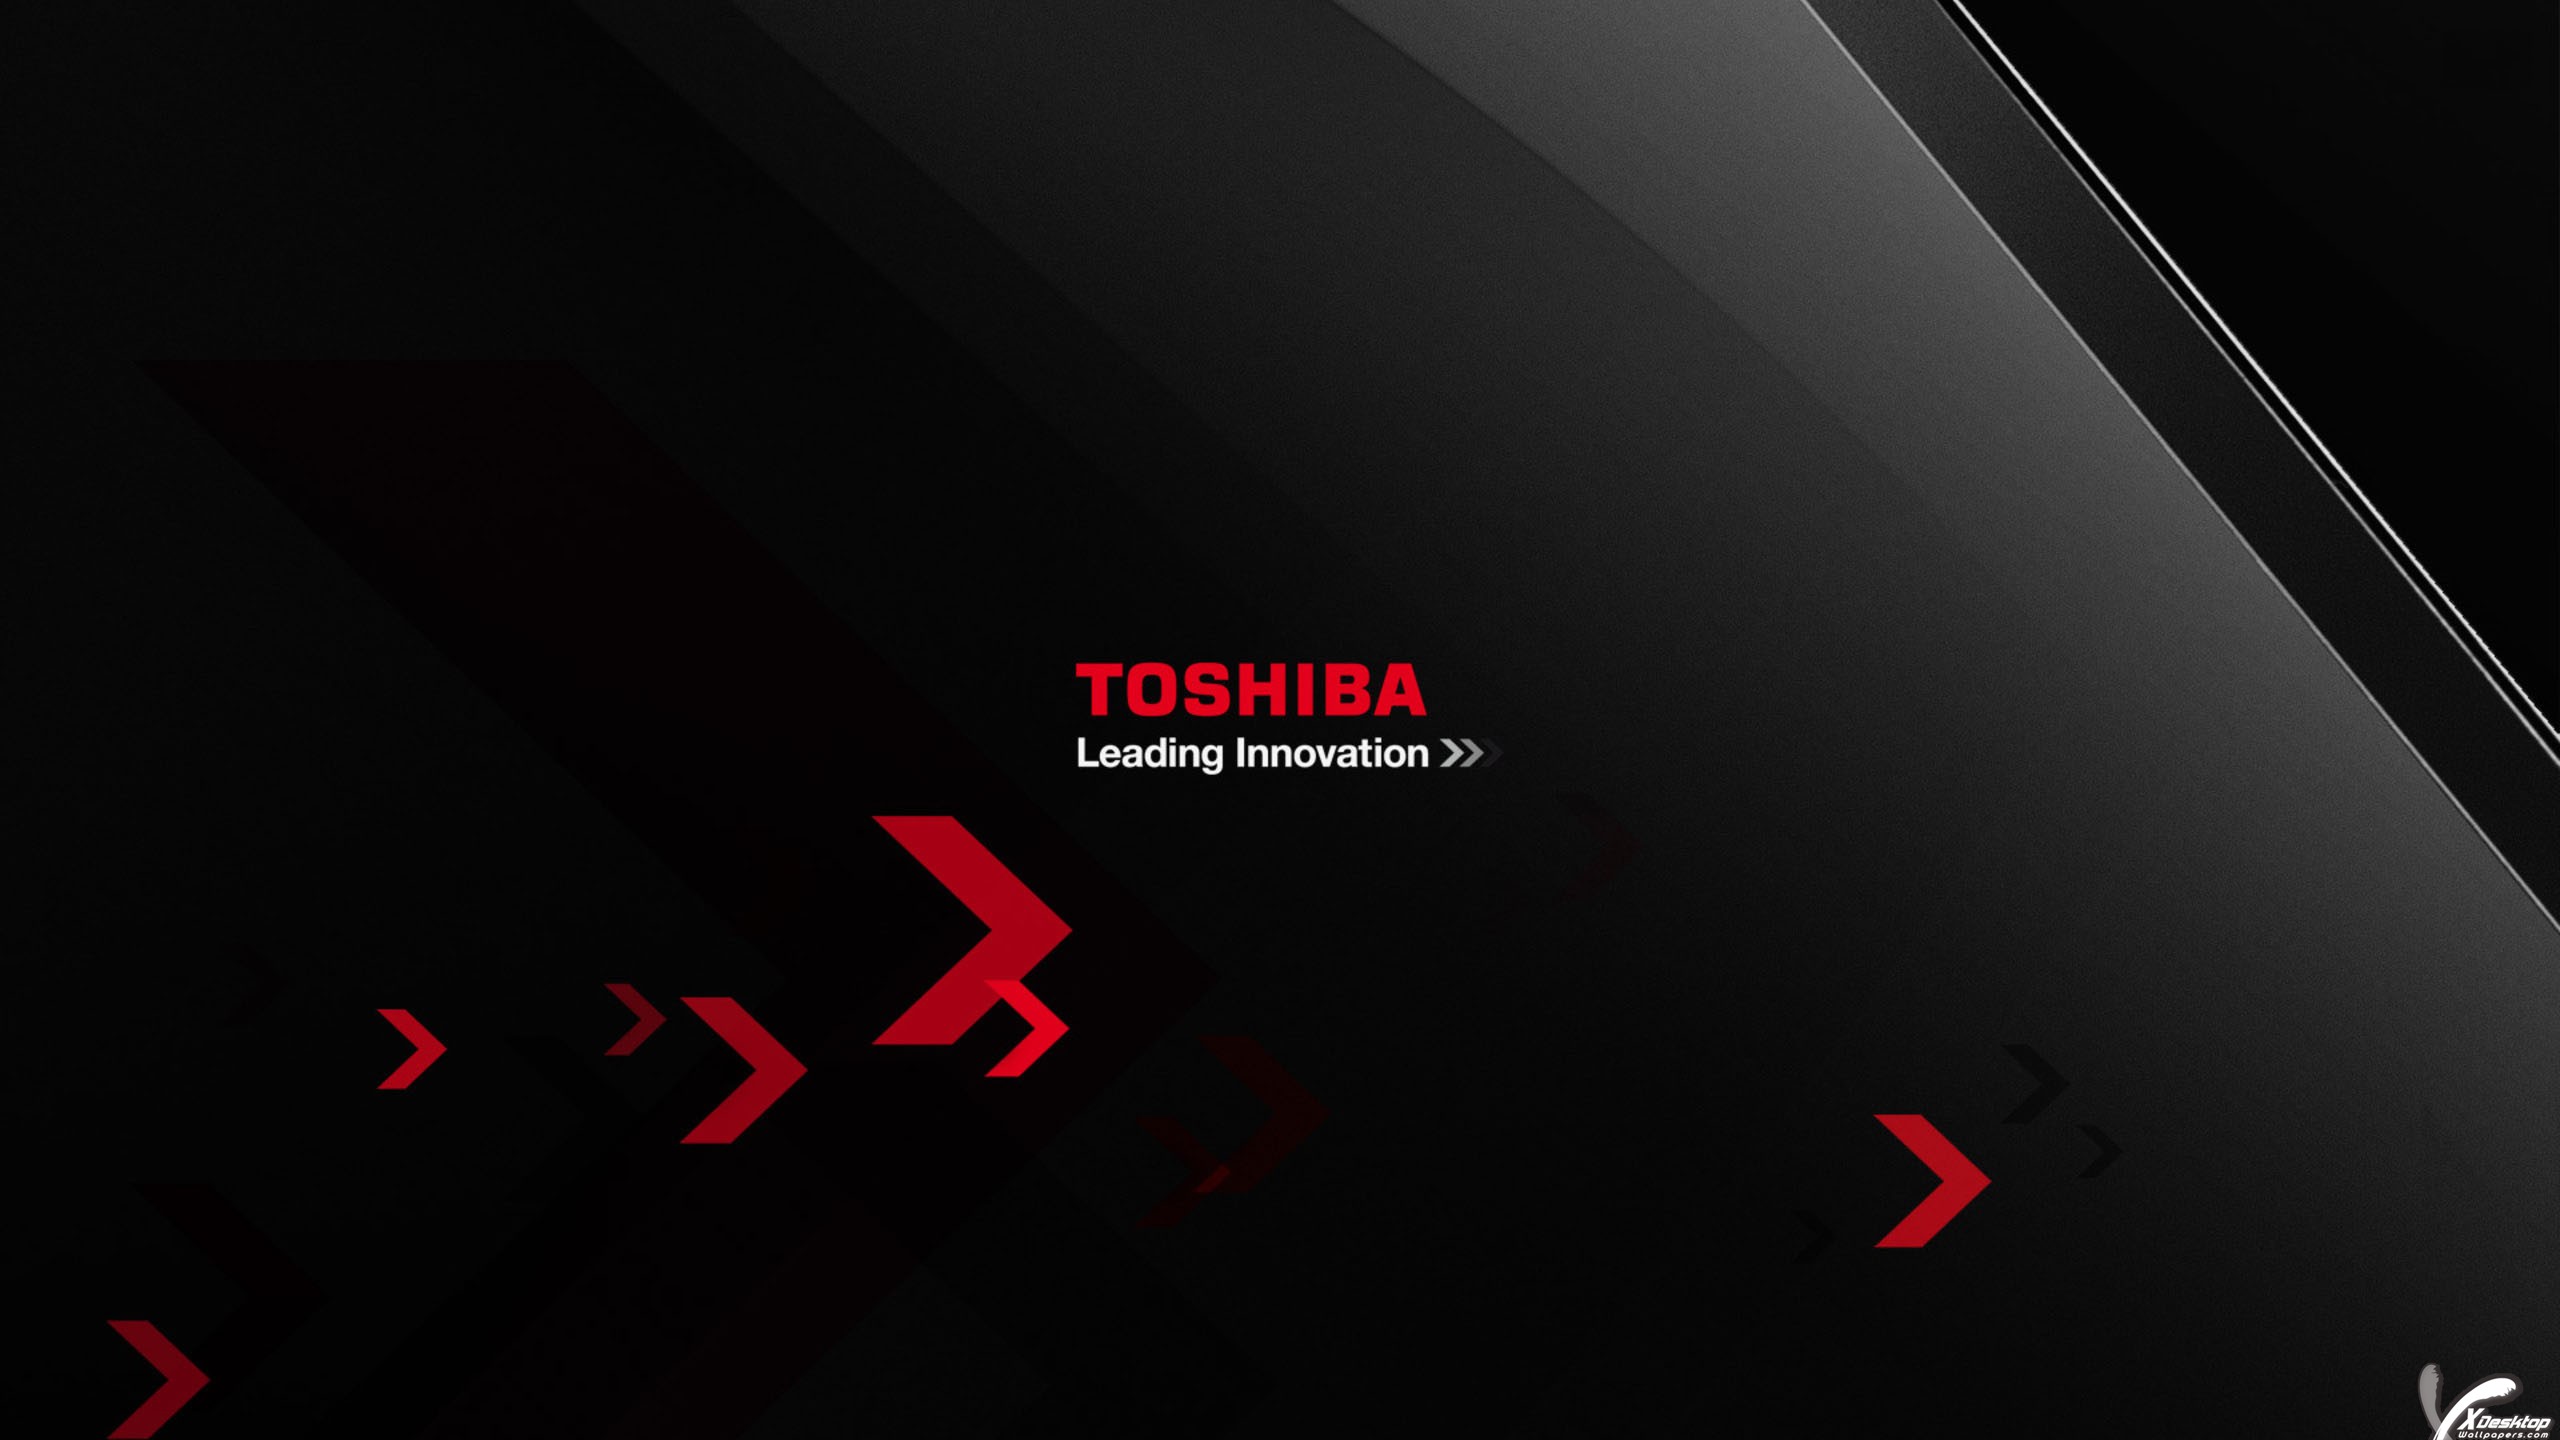 Toshiba Leading Innovation Logo photo - 1